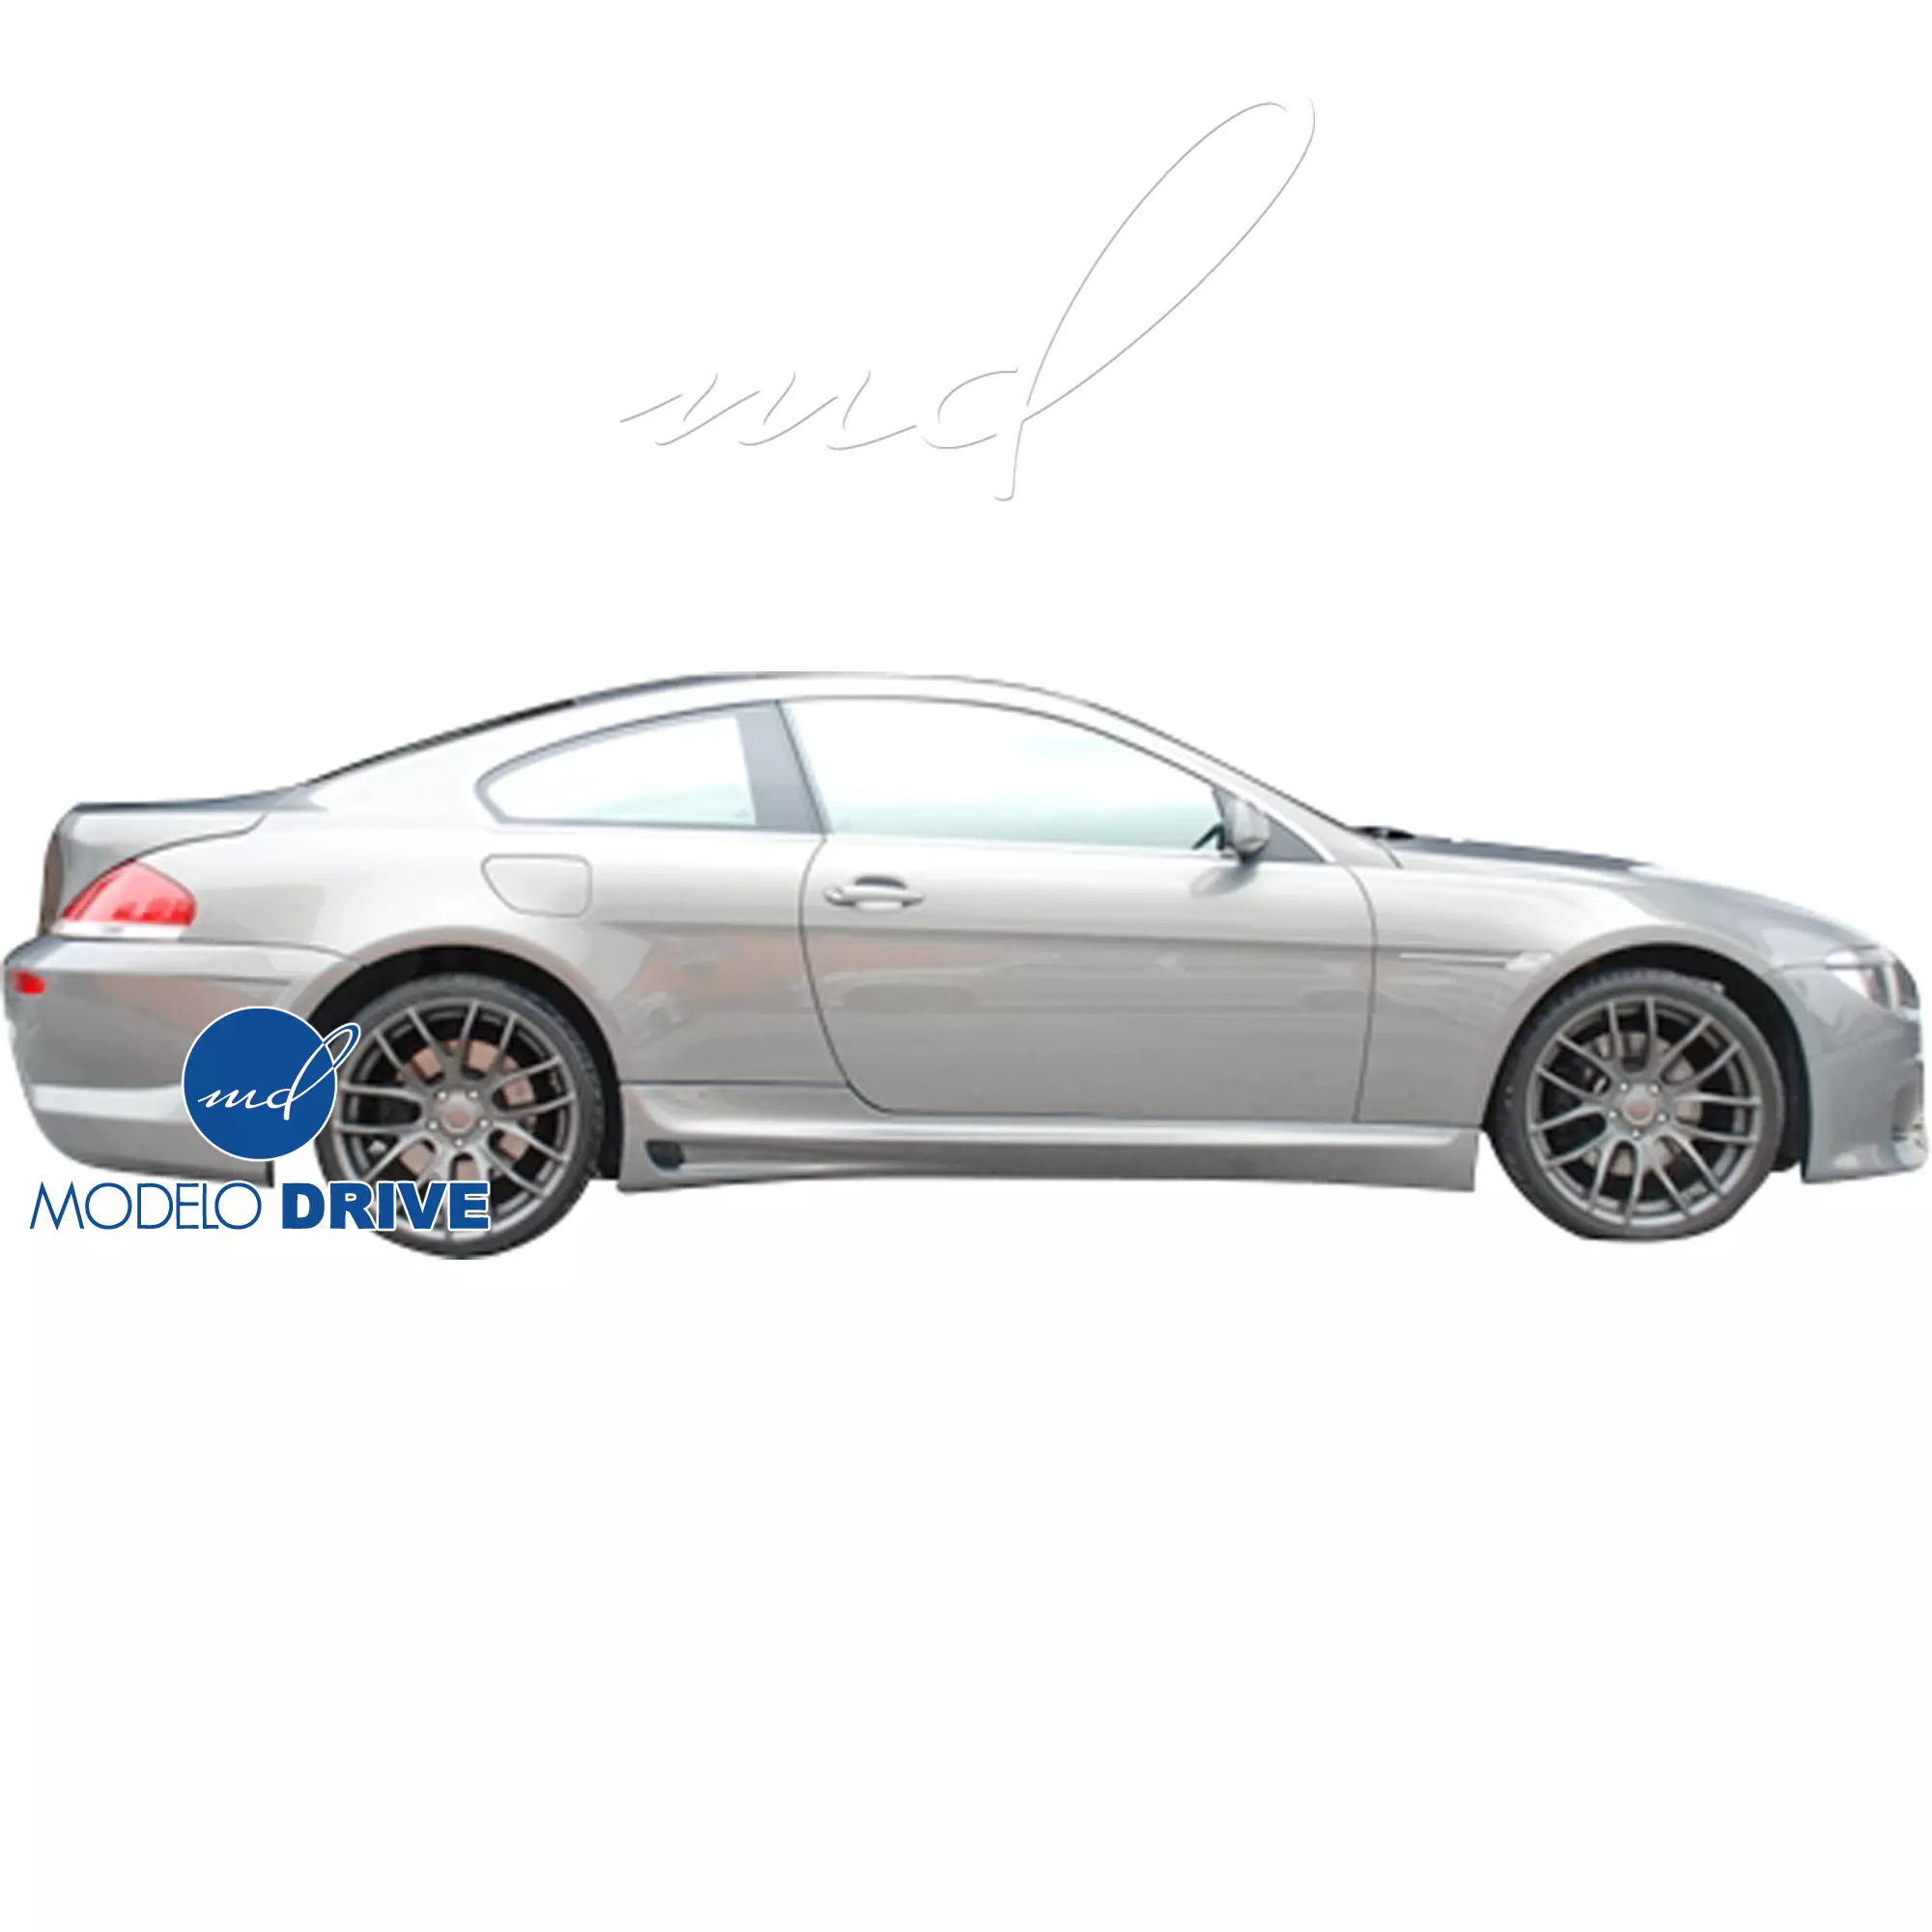 ModeloDrive FRP LDES Body Kit 4pc > BMW 6-Series E63 E64 2004-2010 > 2dr - Image 35